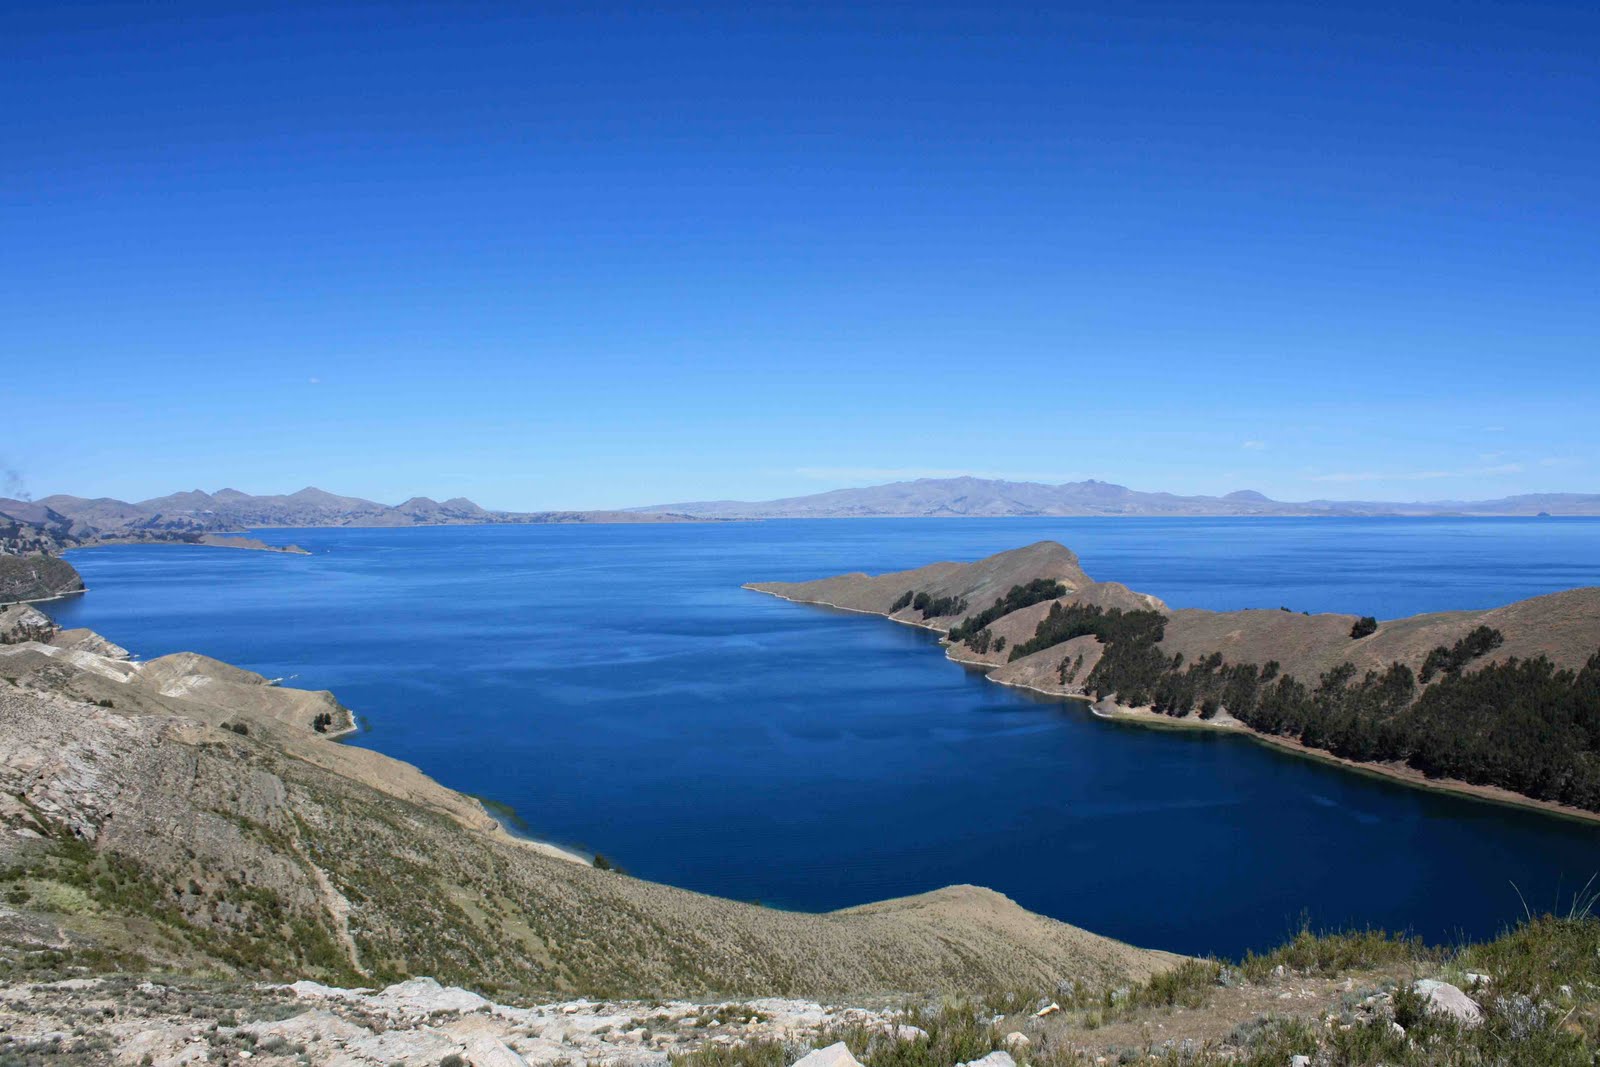 Высочайшее судоходное озеро. Южная Америка озеро Титикака. Боливия озеро Титикака. Озеро Титикака Перу. Высокогорное озеро Титикака.